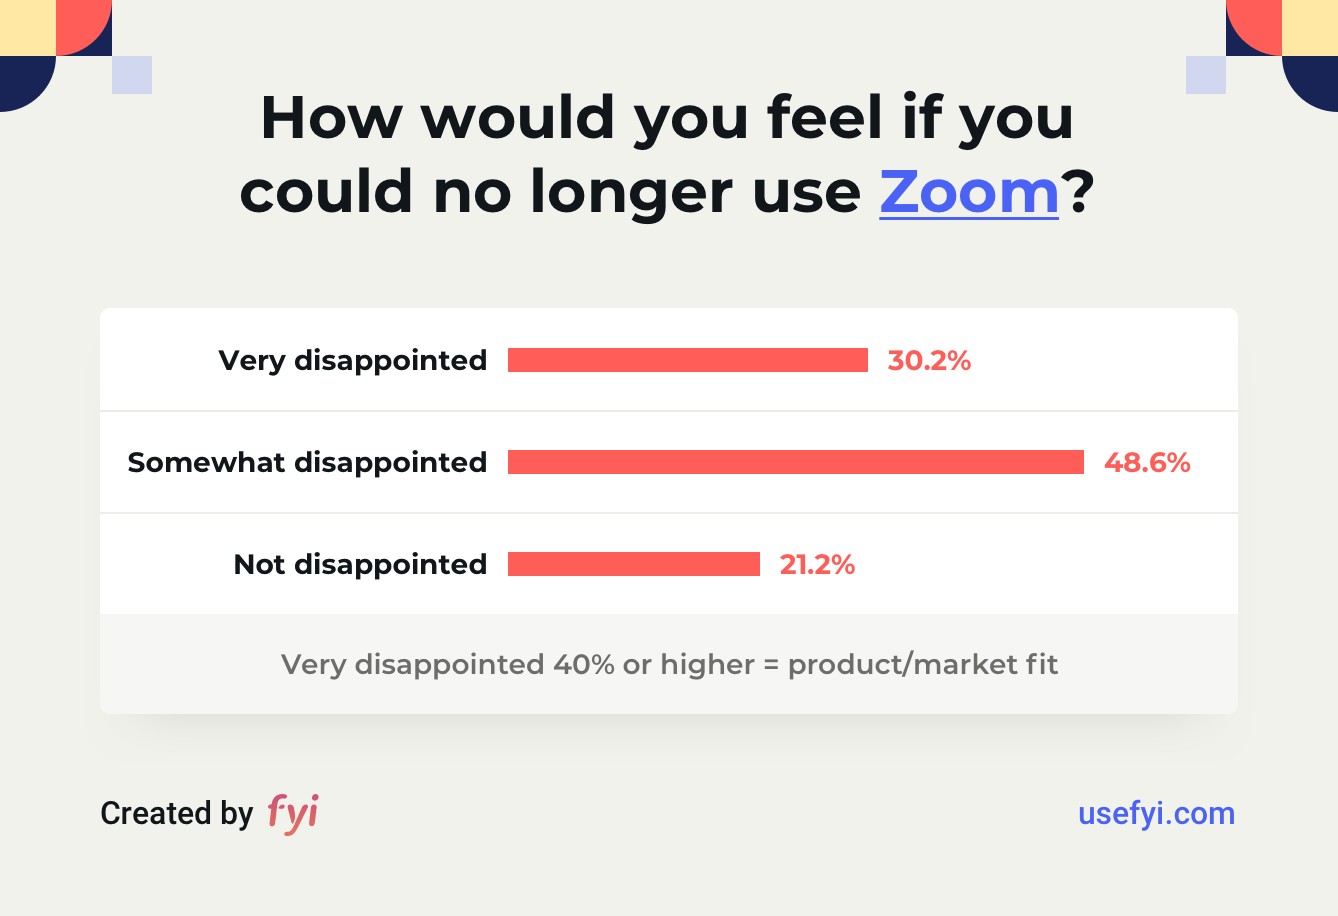 Zoom product-market fit score